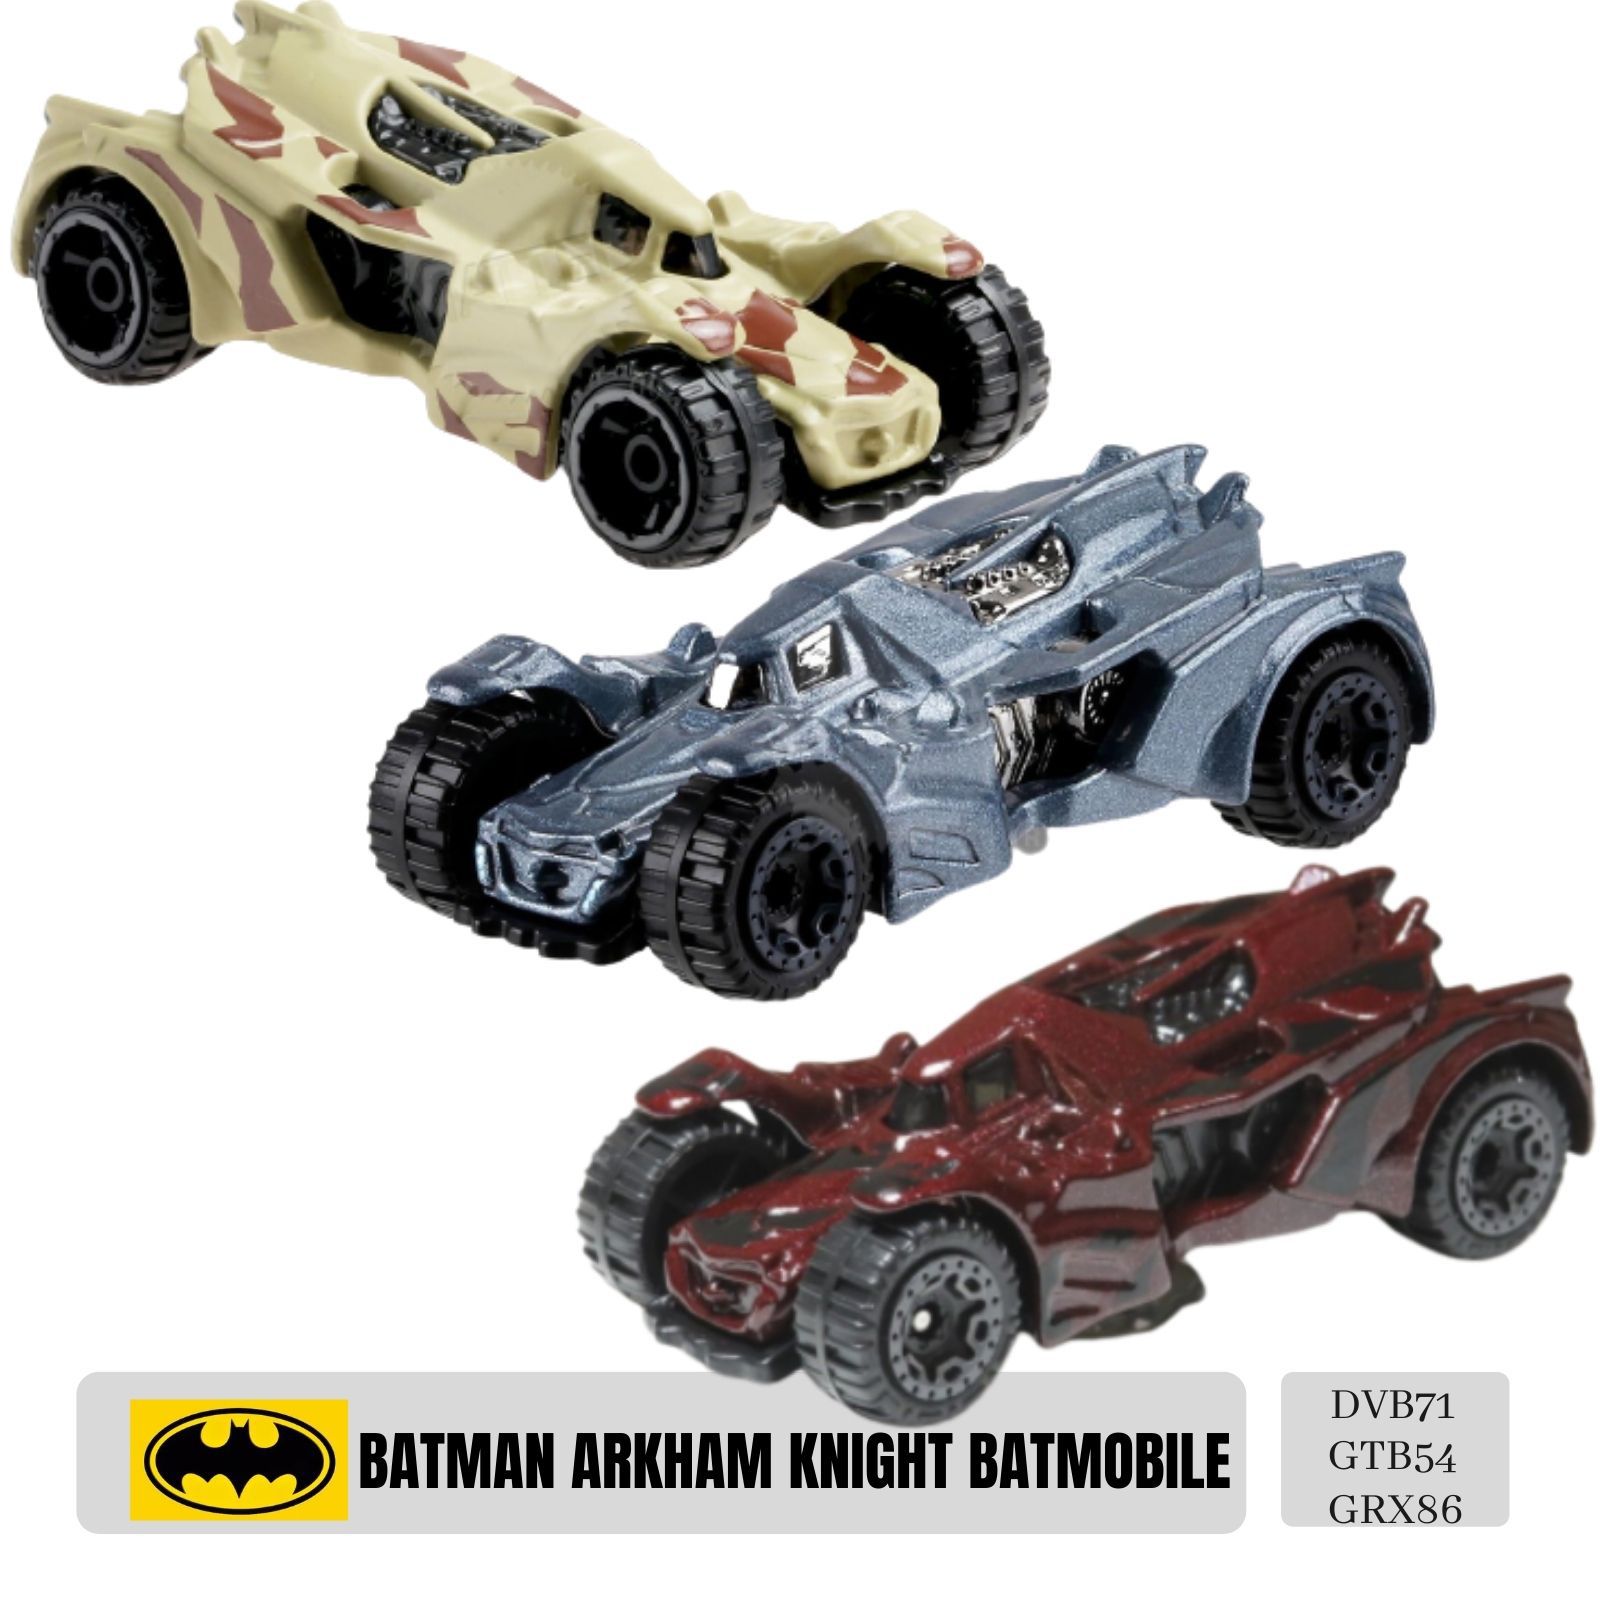 Carrinho Hot Wheels - Batman: Arkham Knight Batmobile - Batman DC - 1:64 -  Mattel - superlegalbrinquedos